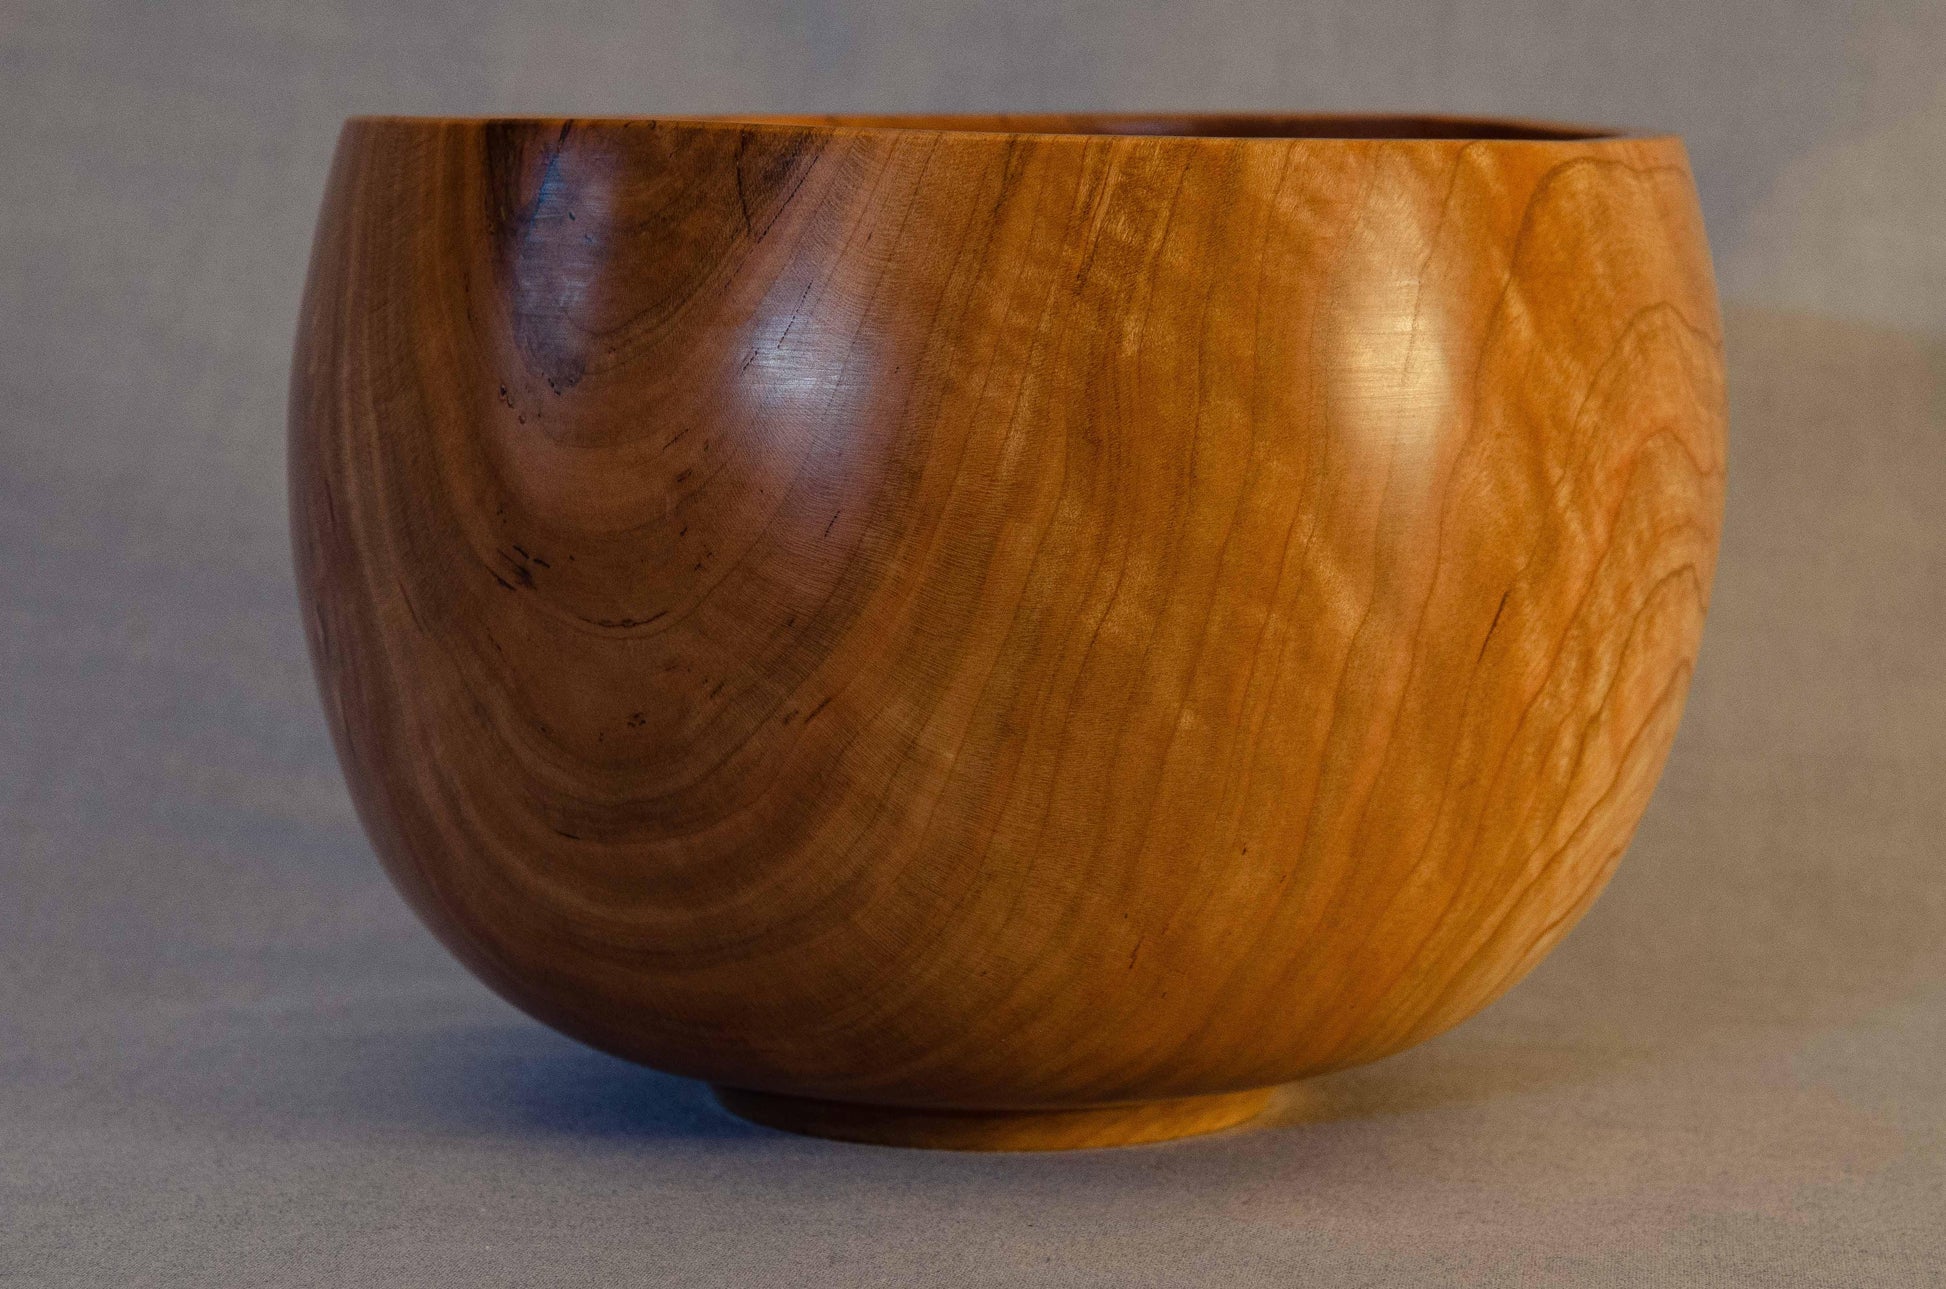 Medium cherry bowl - Rare Earth Bowls